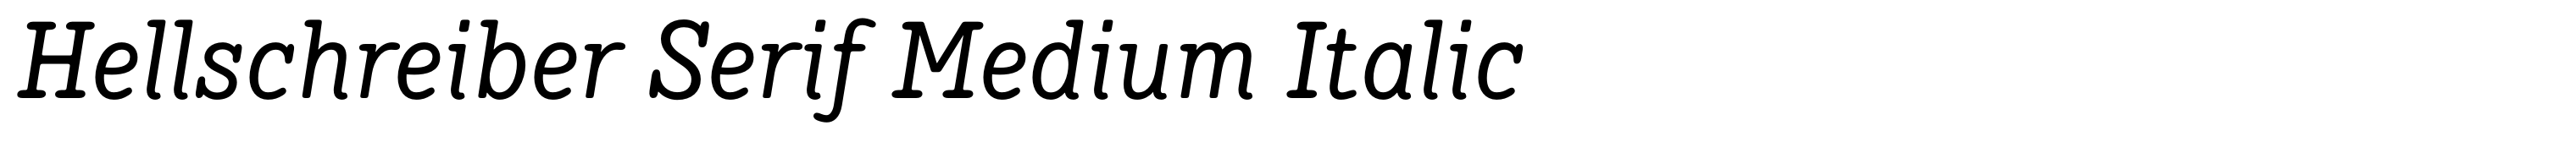 Hellschreiber Serif Medium Italic